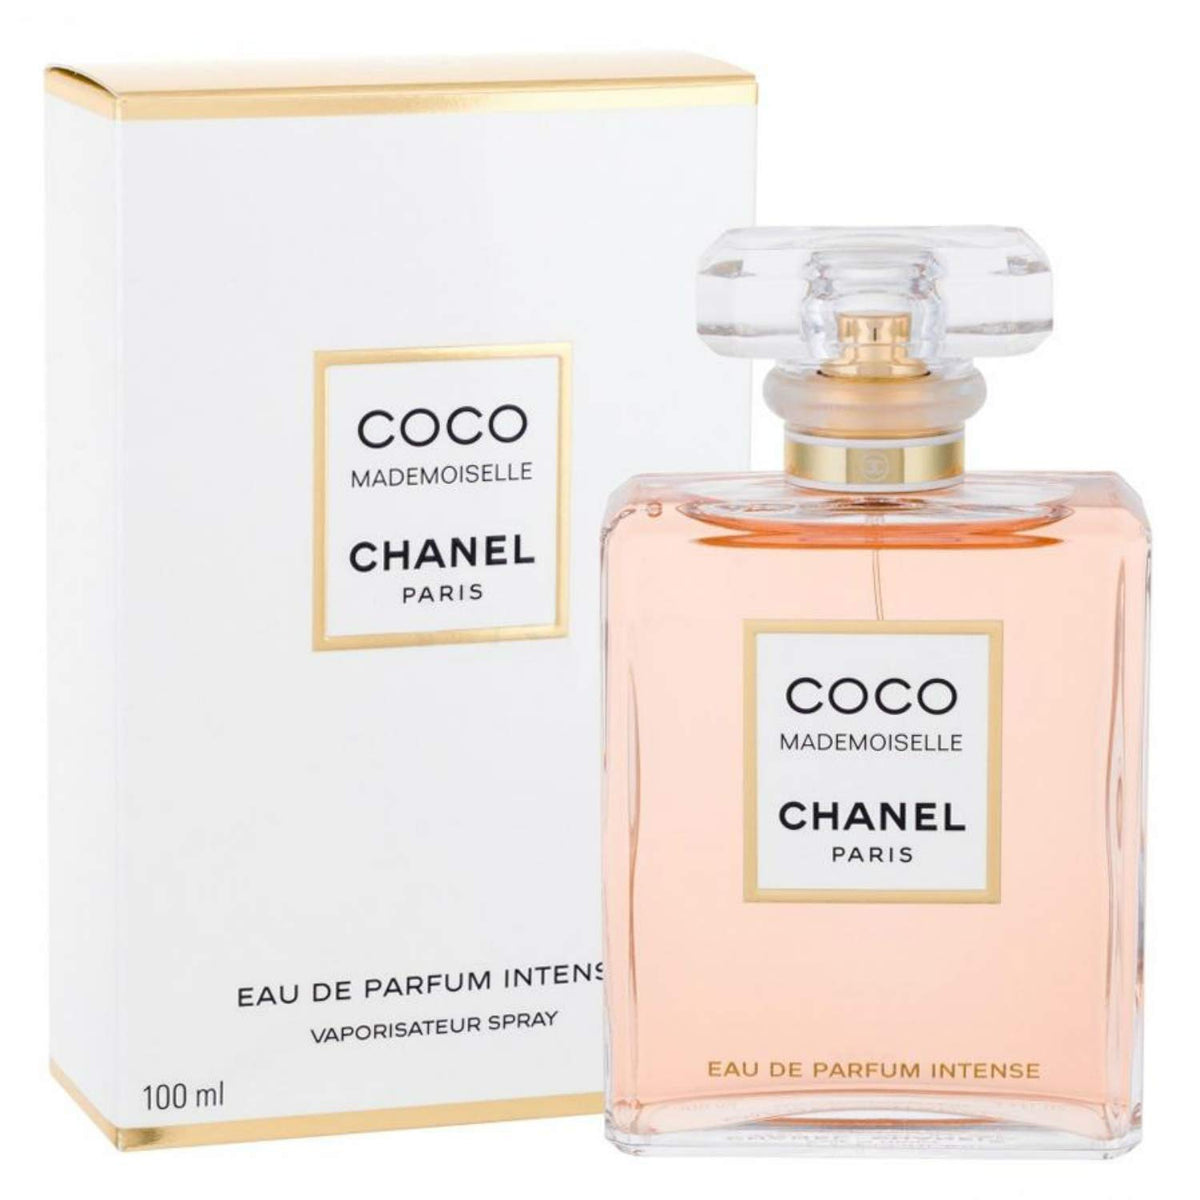 Coco Mademoiselle By Chanel For Women - Eau de Parfum Intense - 100ml